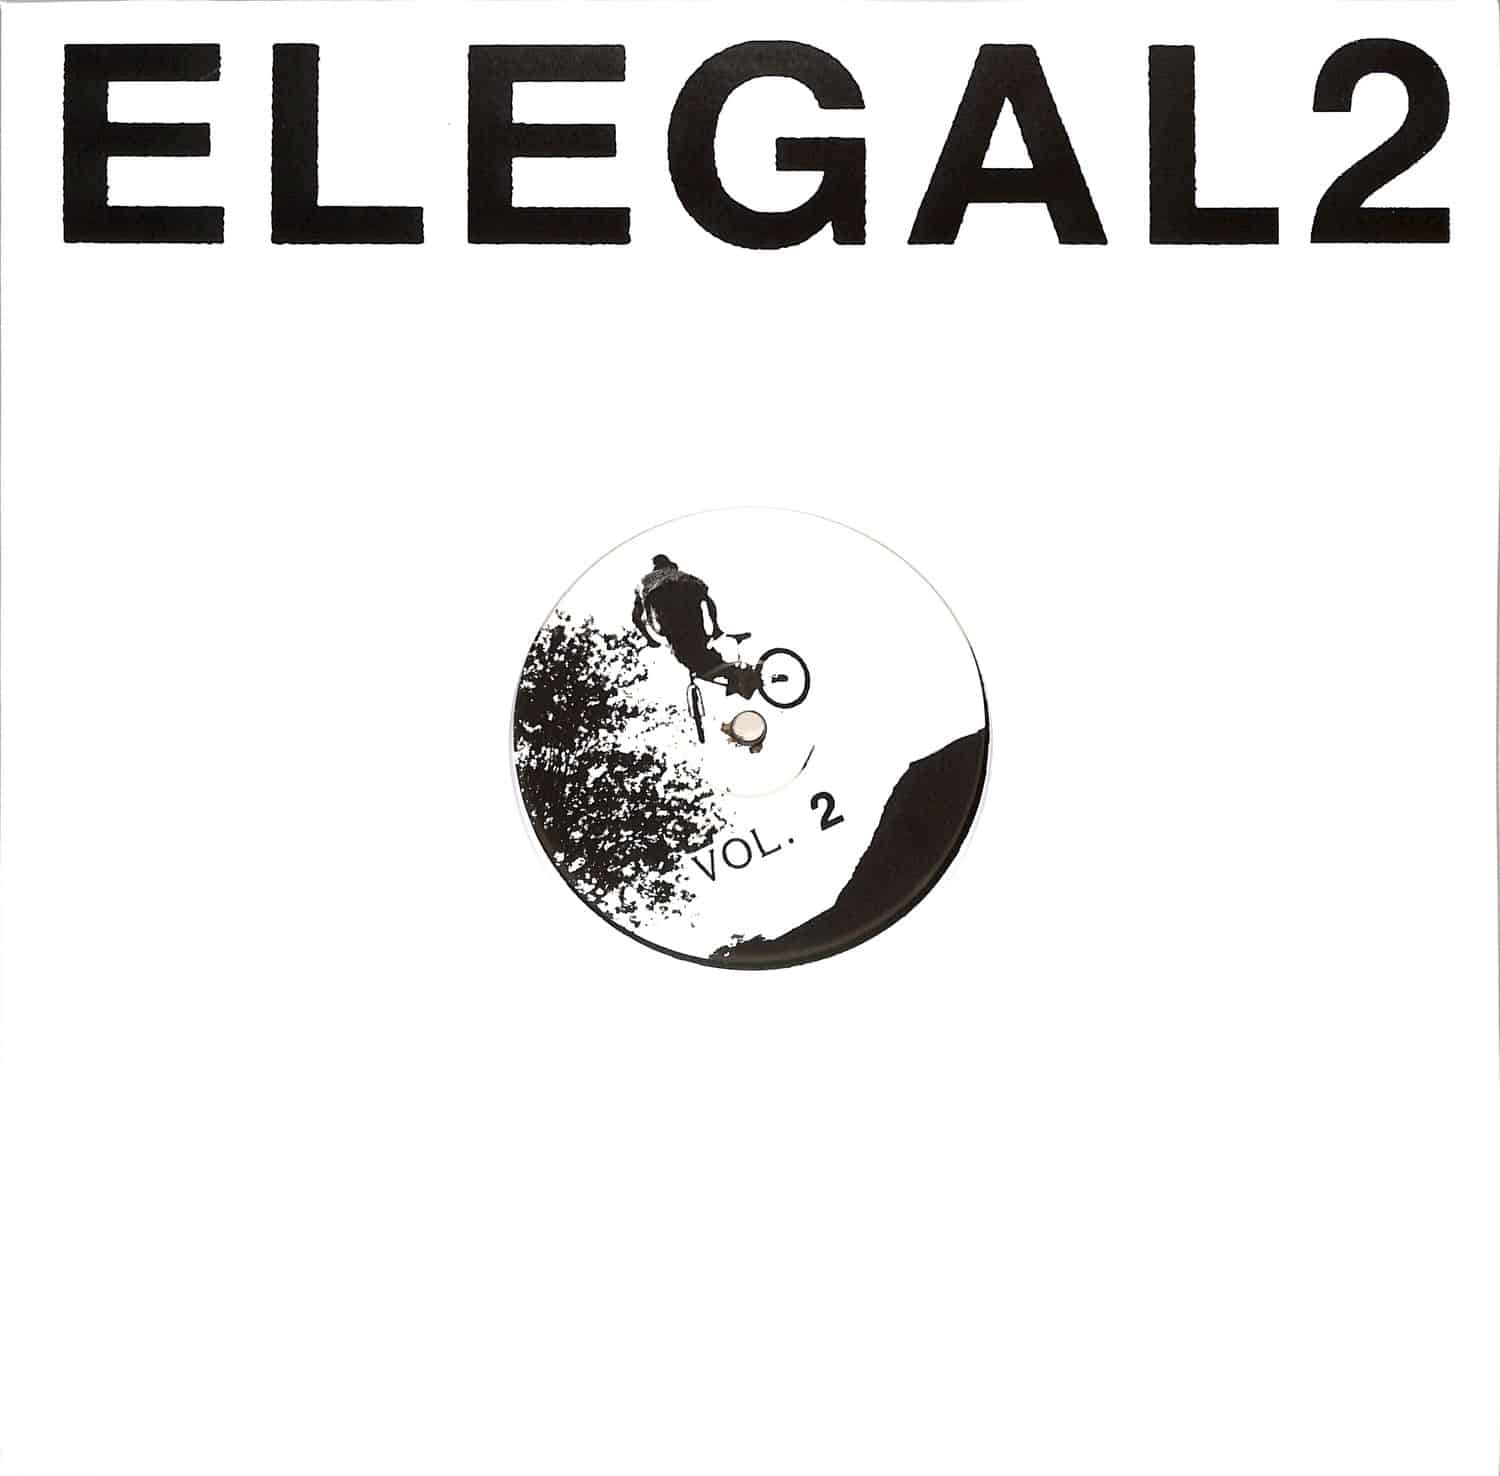 Lemmon Grass - ELEGAL2 EP